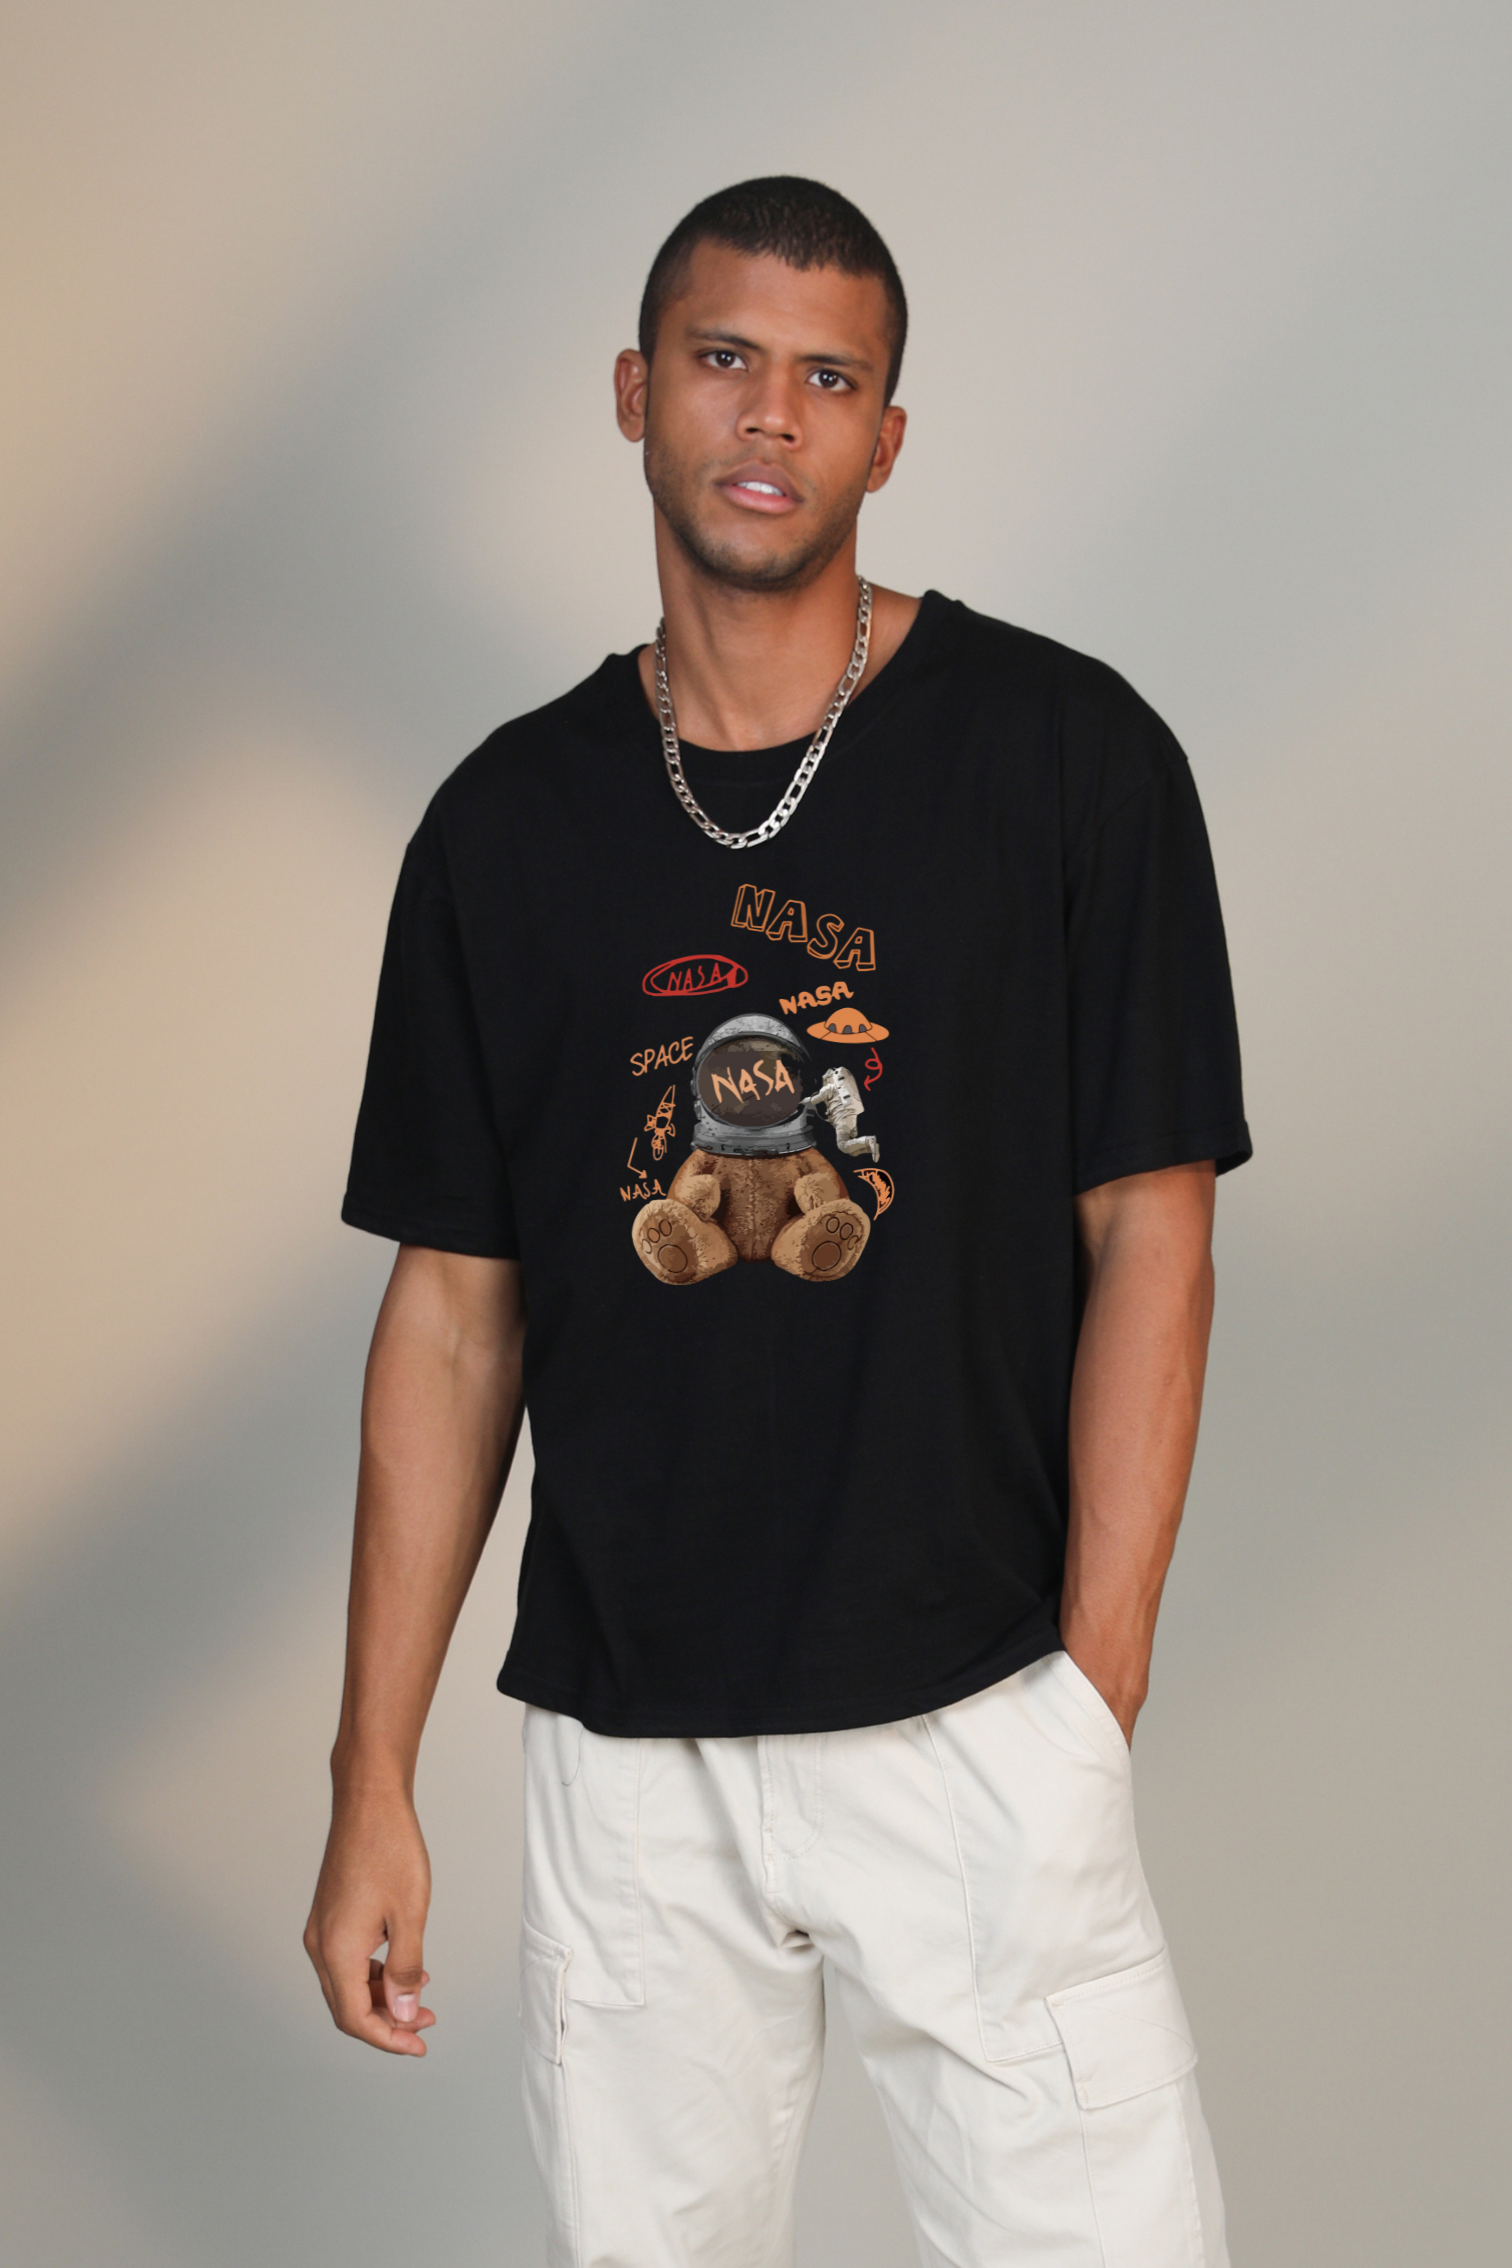 Nasa Bear- Oversized t-shirt